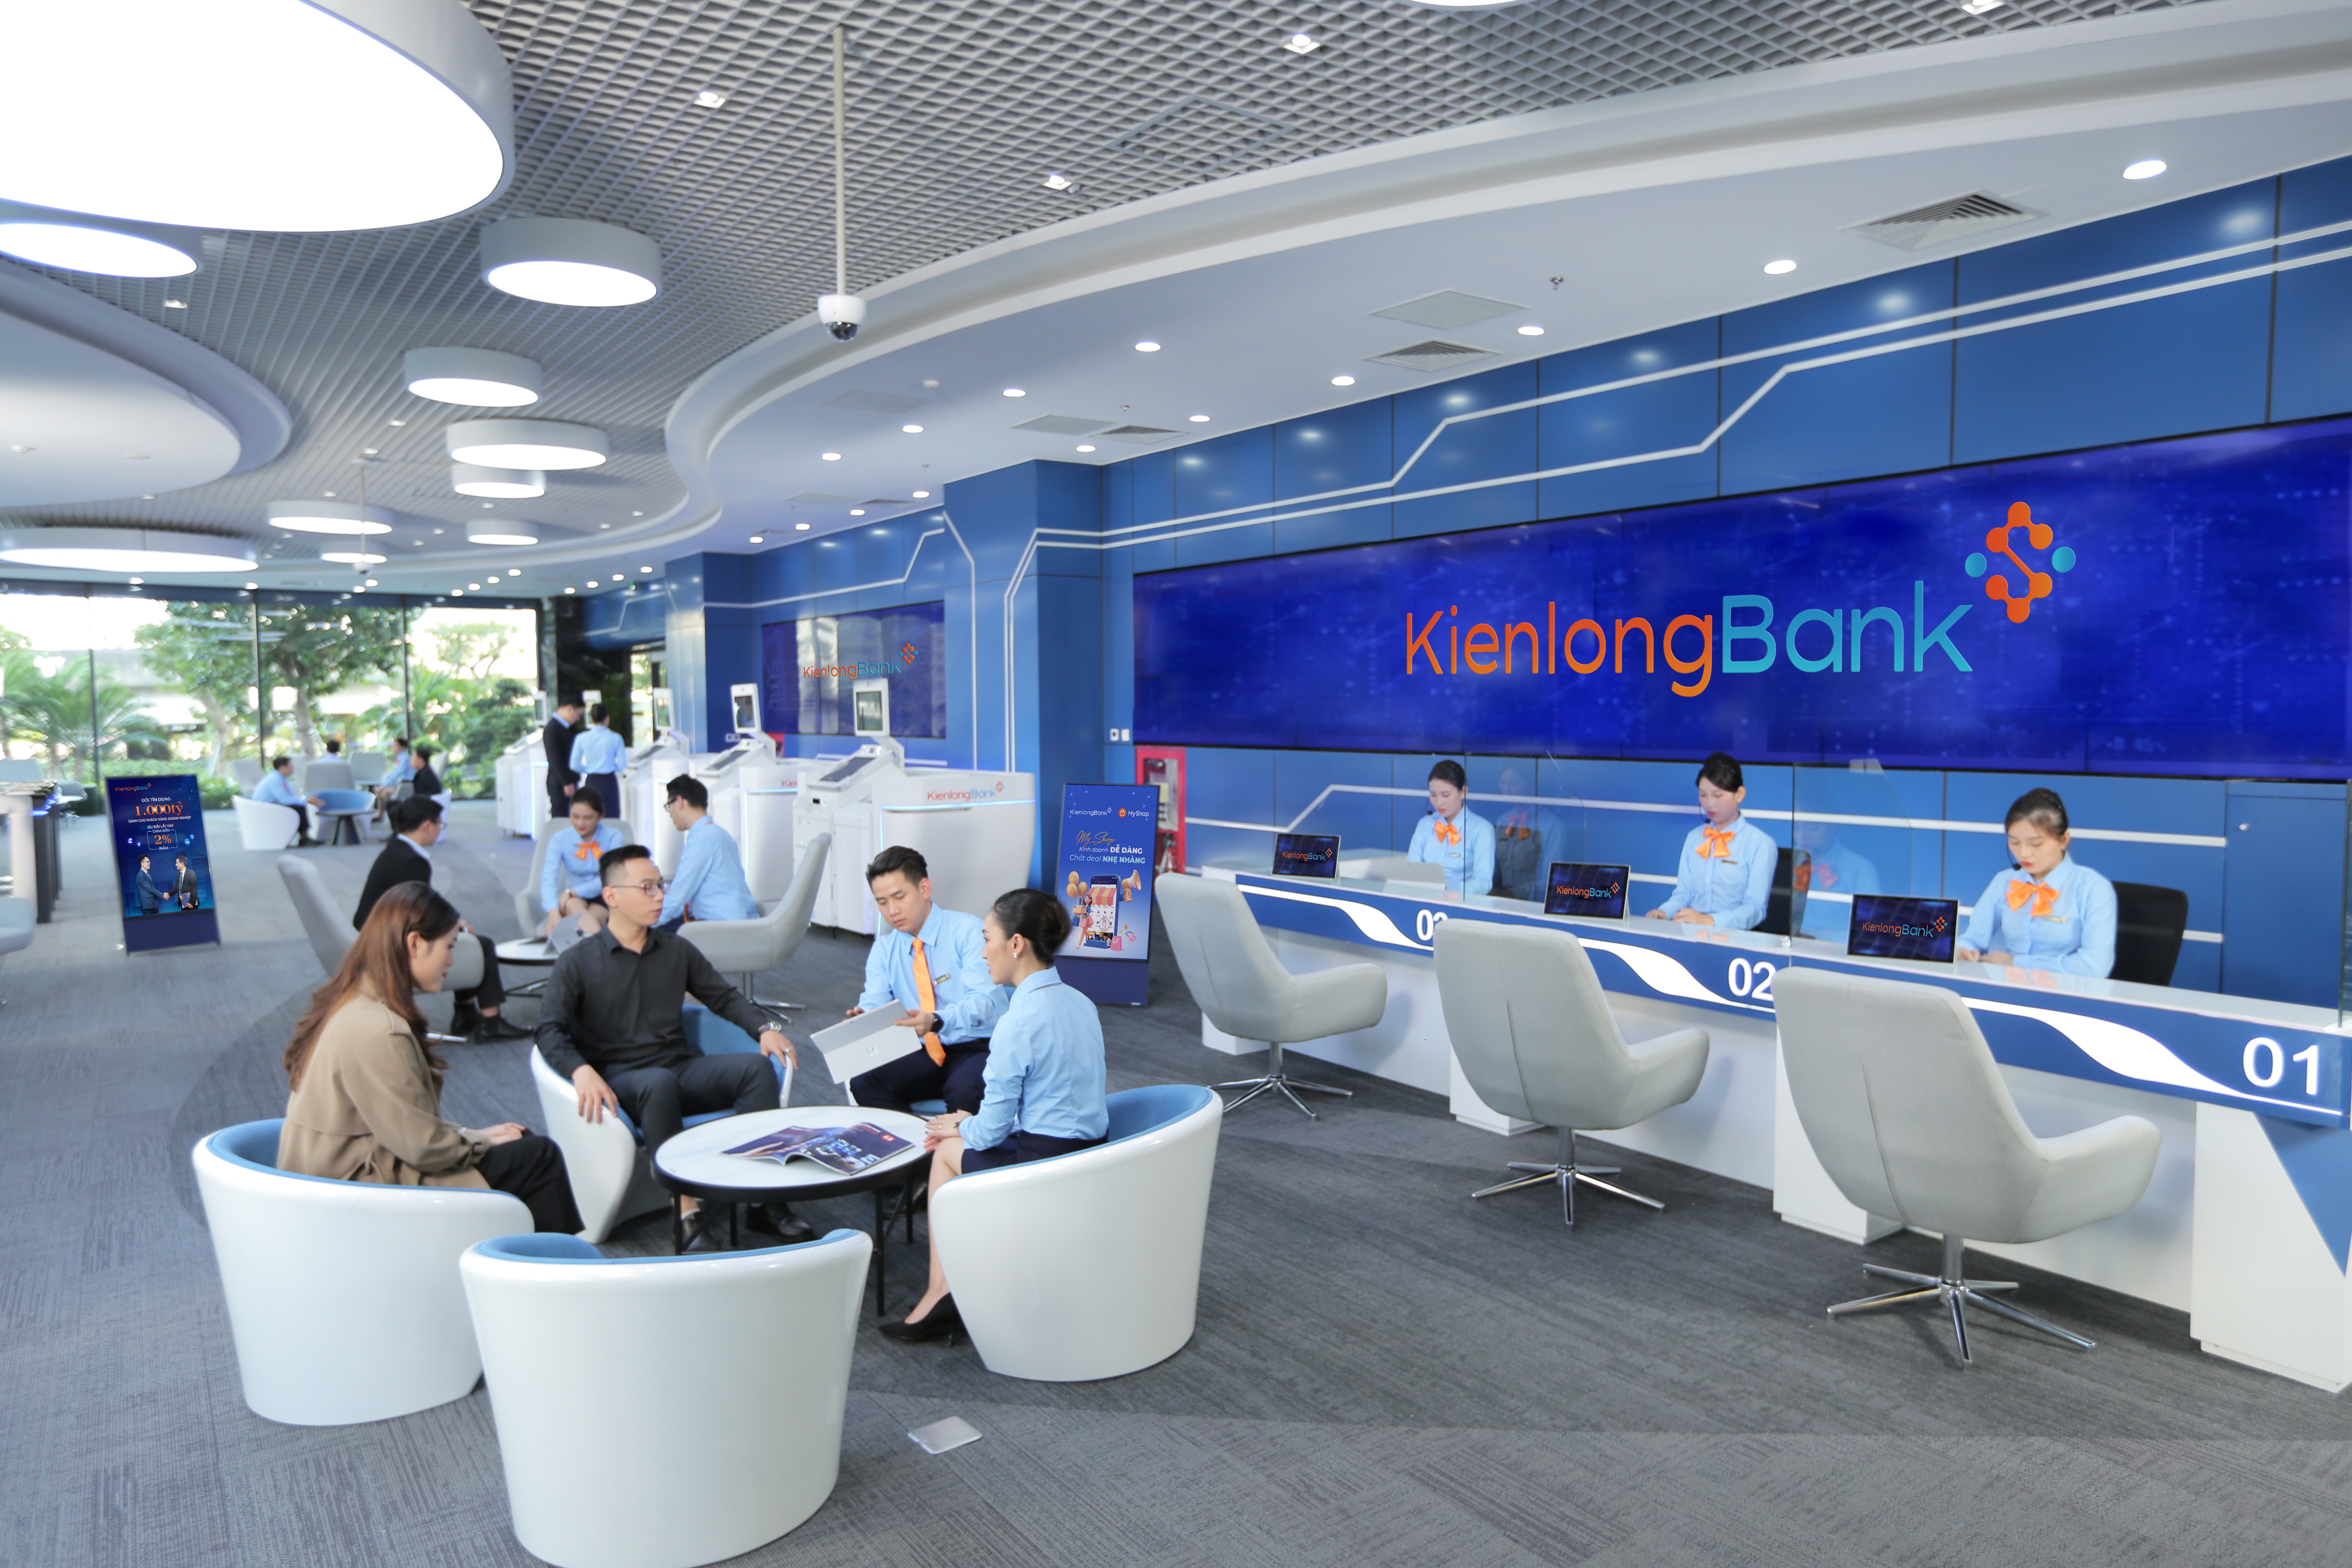 kienlongbank duoc vinh danh boi international business magazine